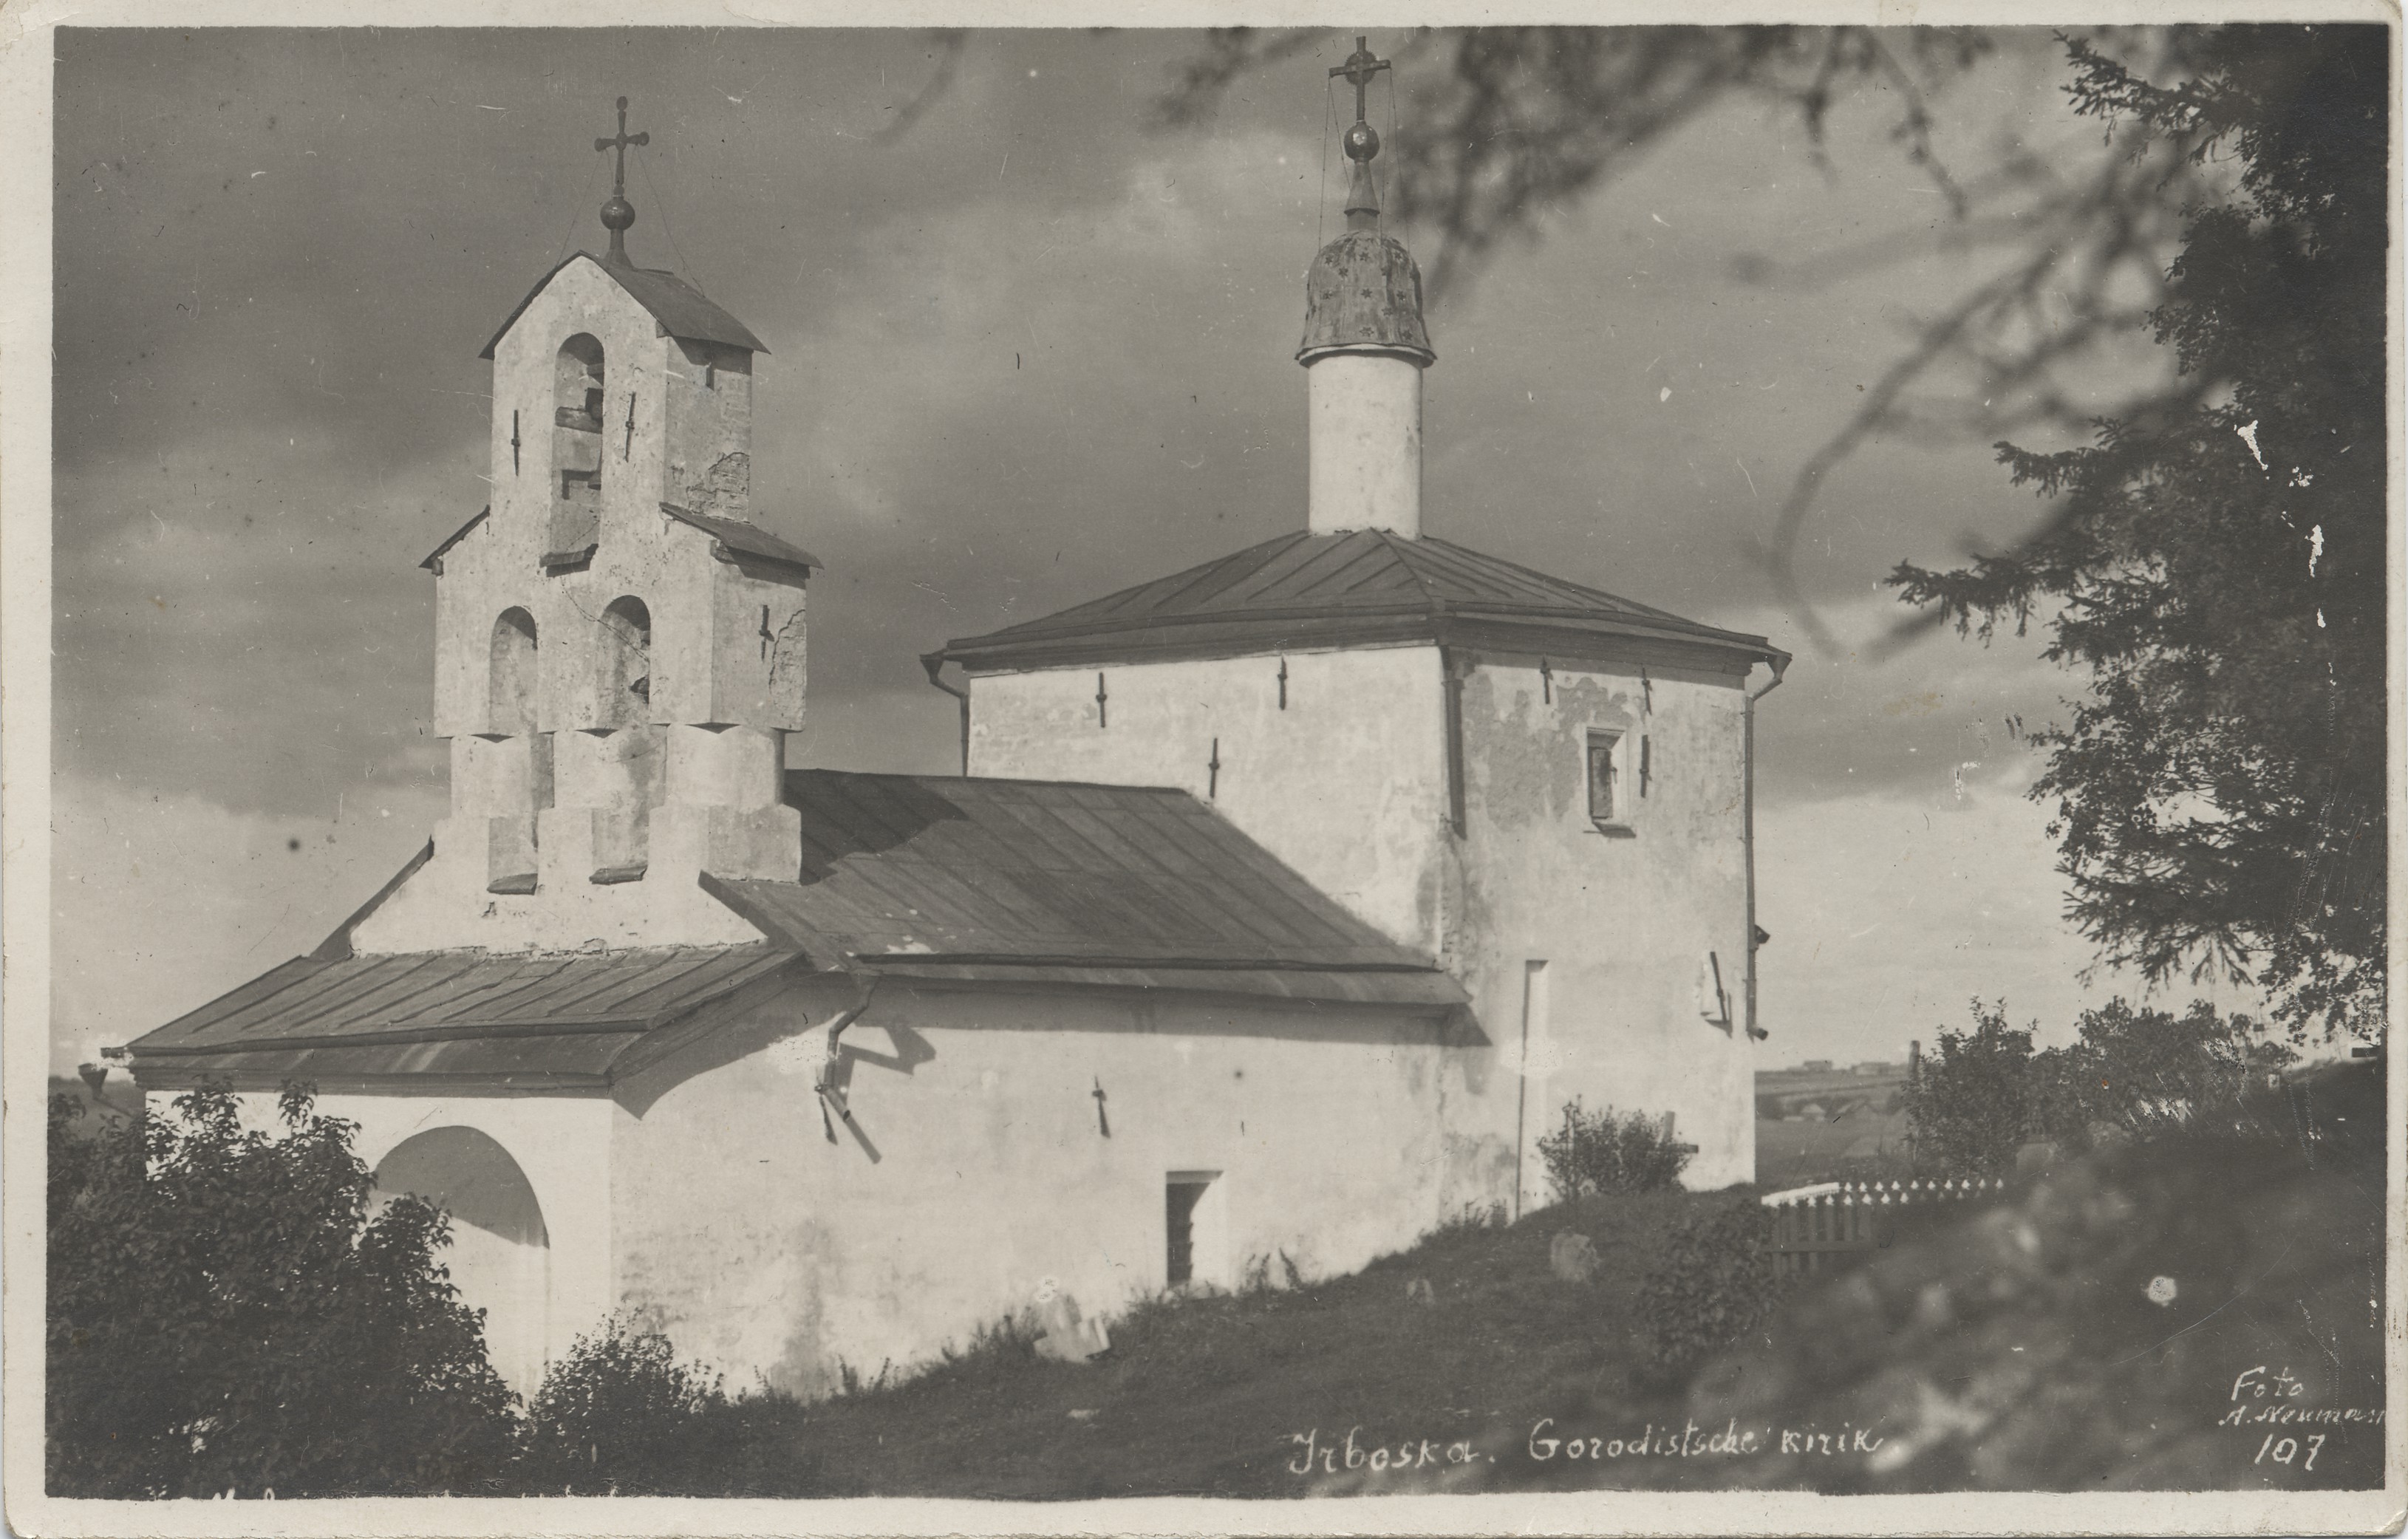 Irboska Gorodistsche Church